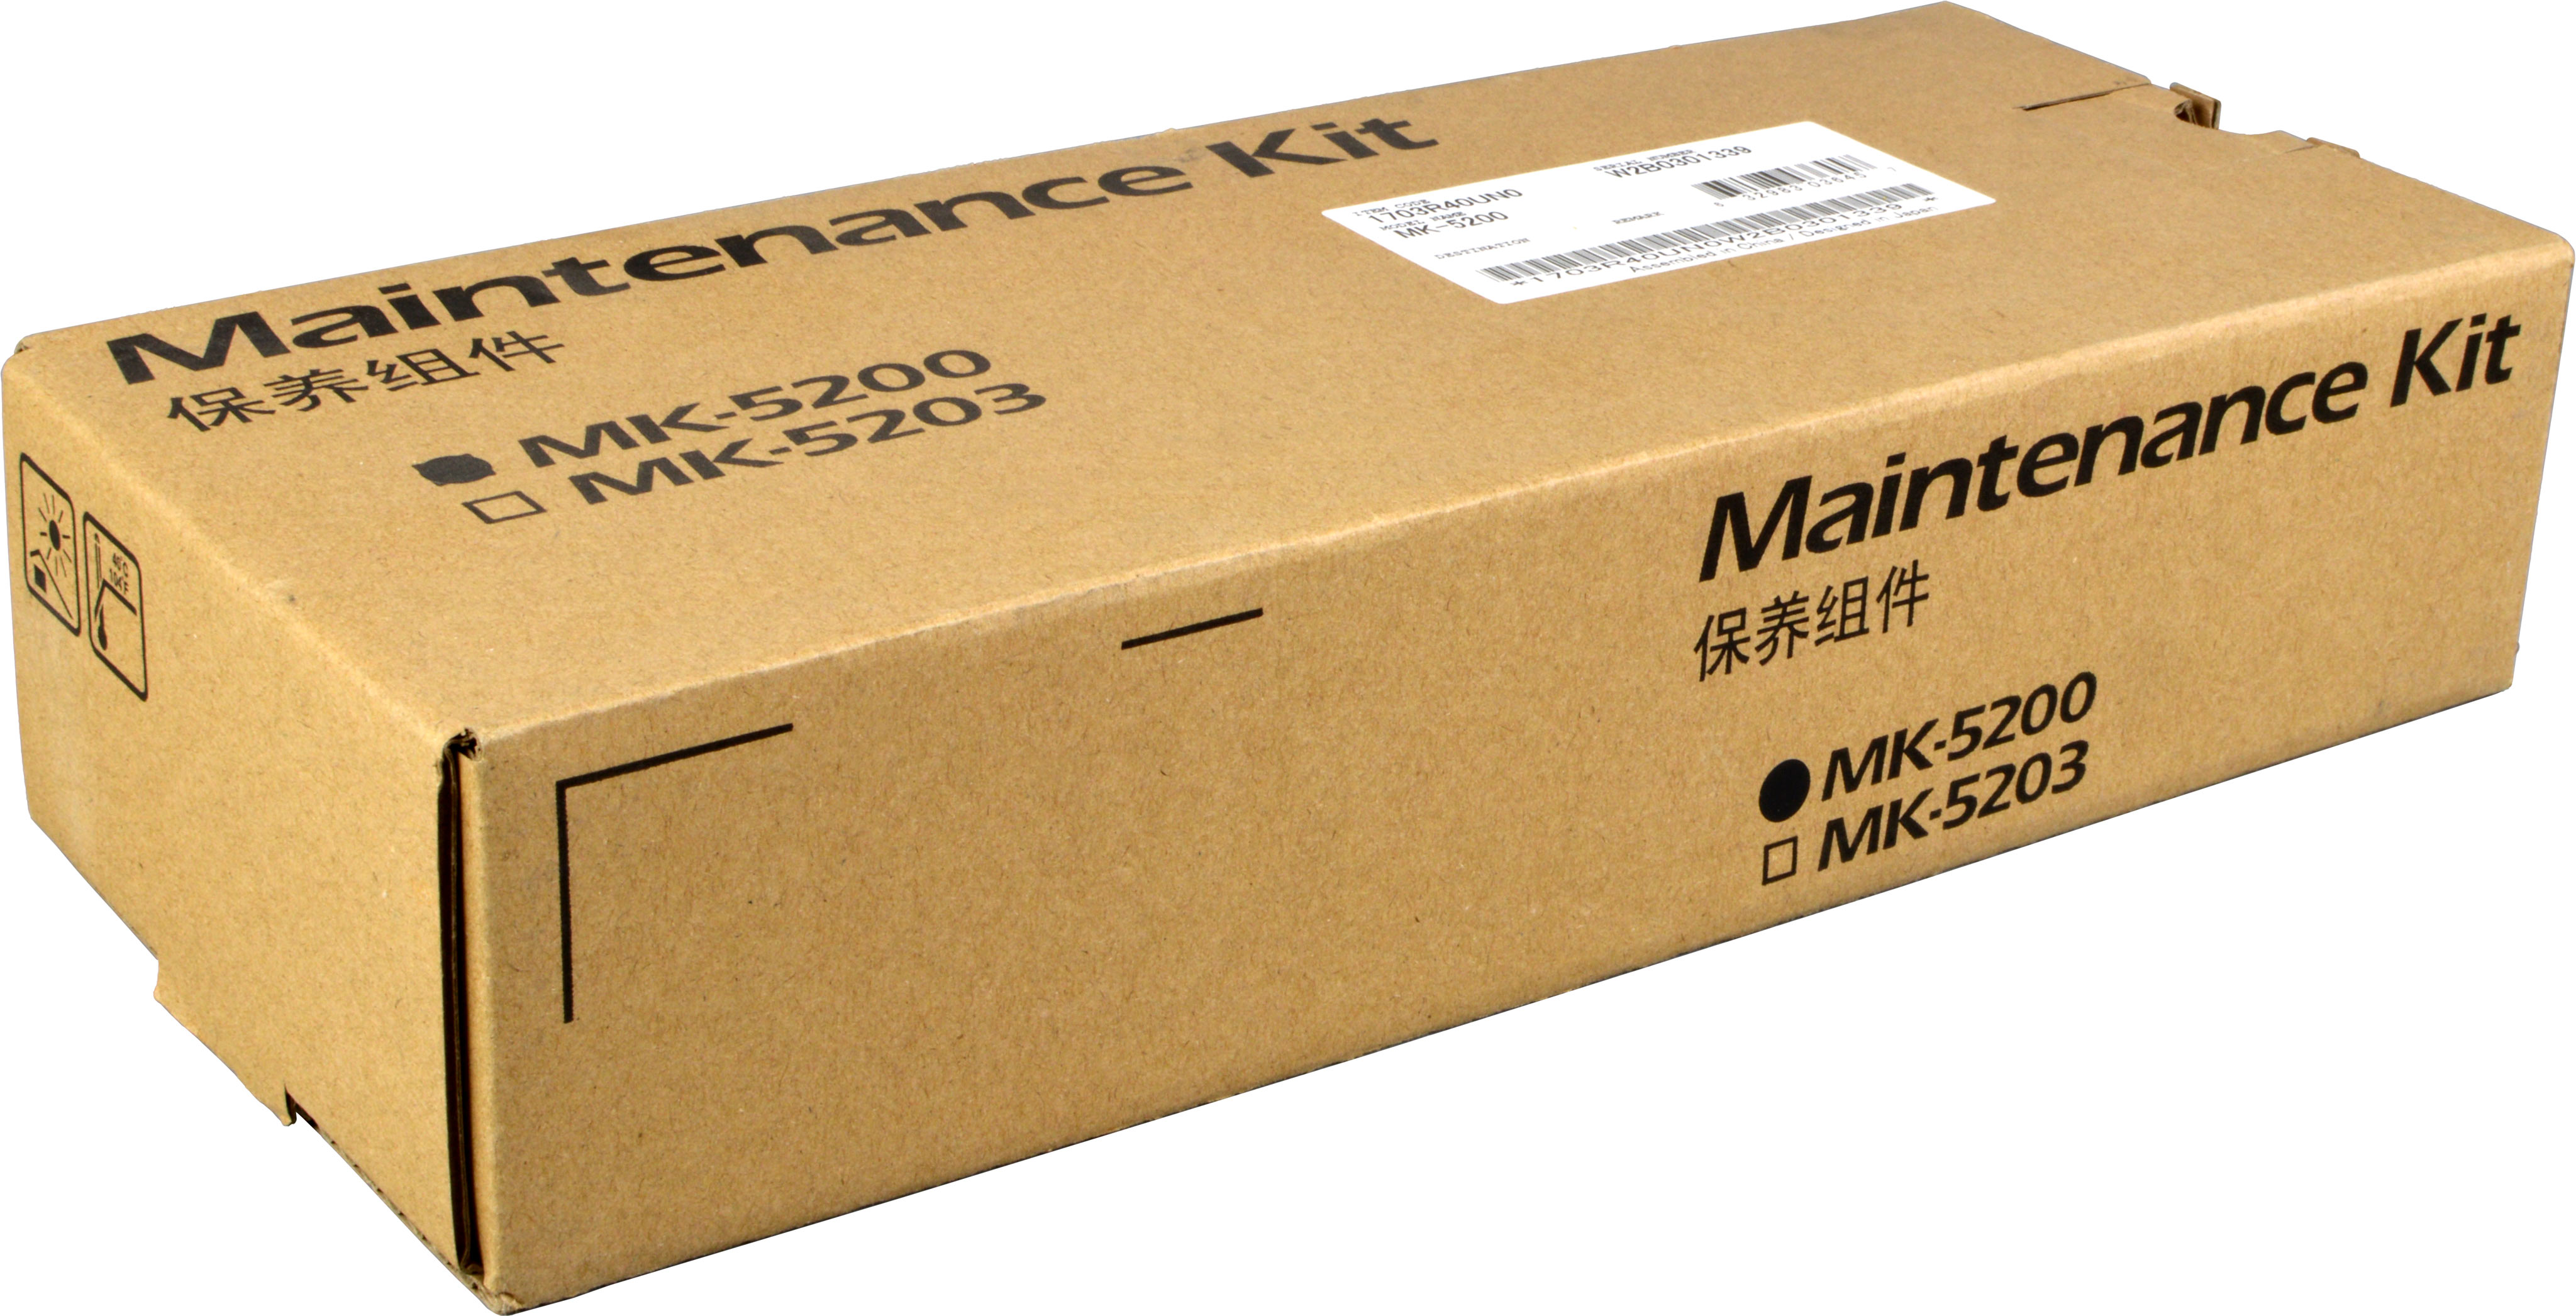 Kyocera Maintenance Kit MK-5200  1703R40UN0